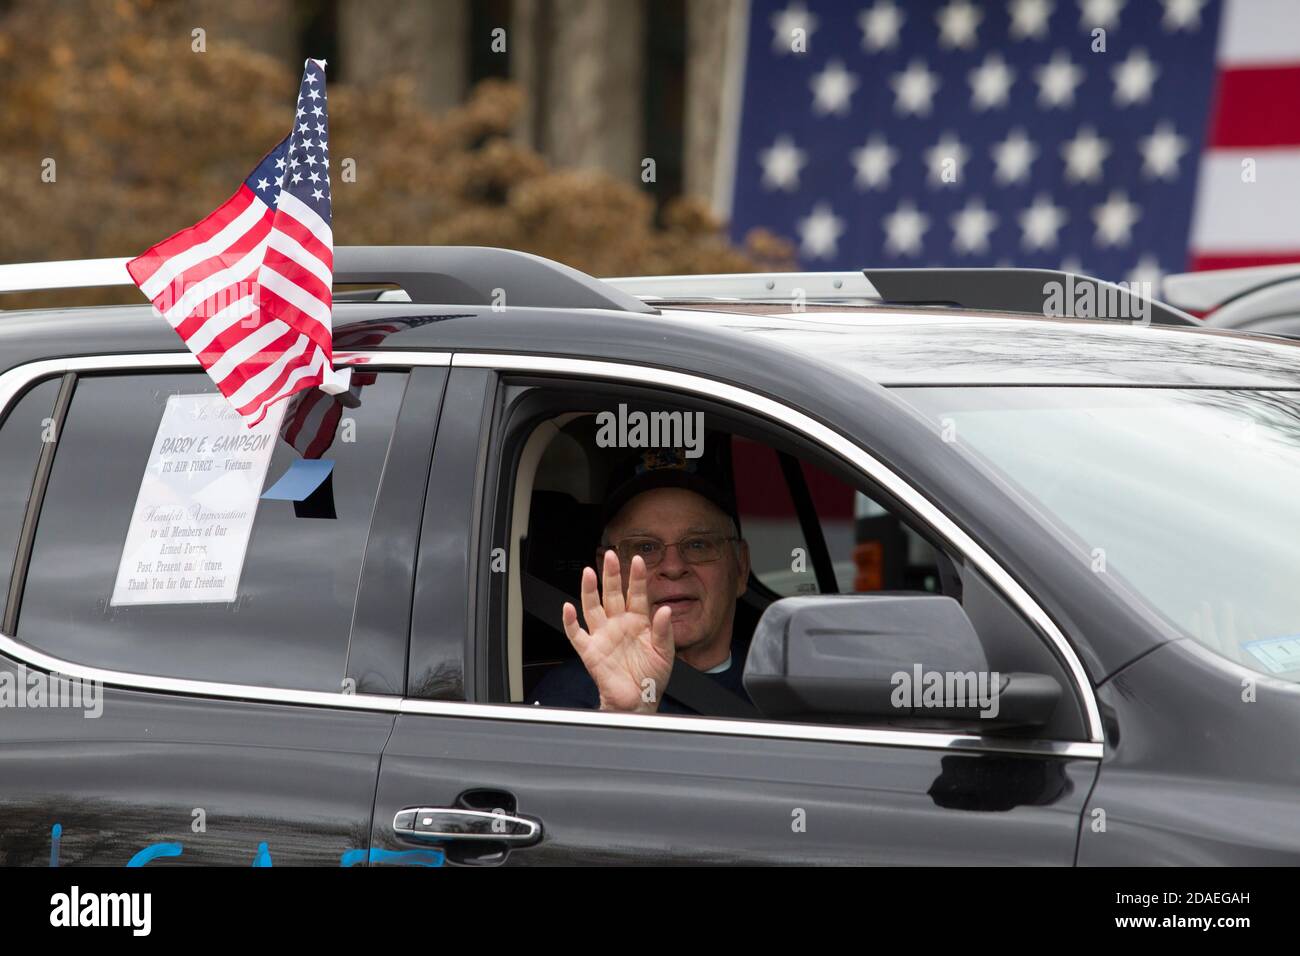 Veterans Car Parade held in Lexington, MA USA on Wednesday, November 11, 2020. Stock Photo